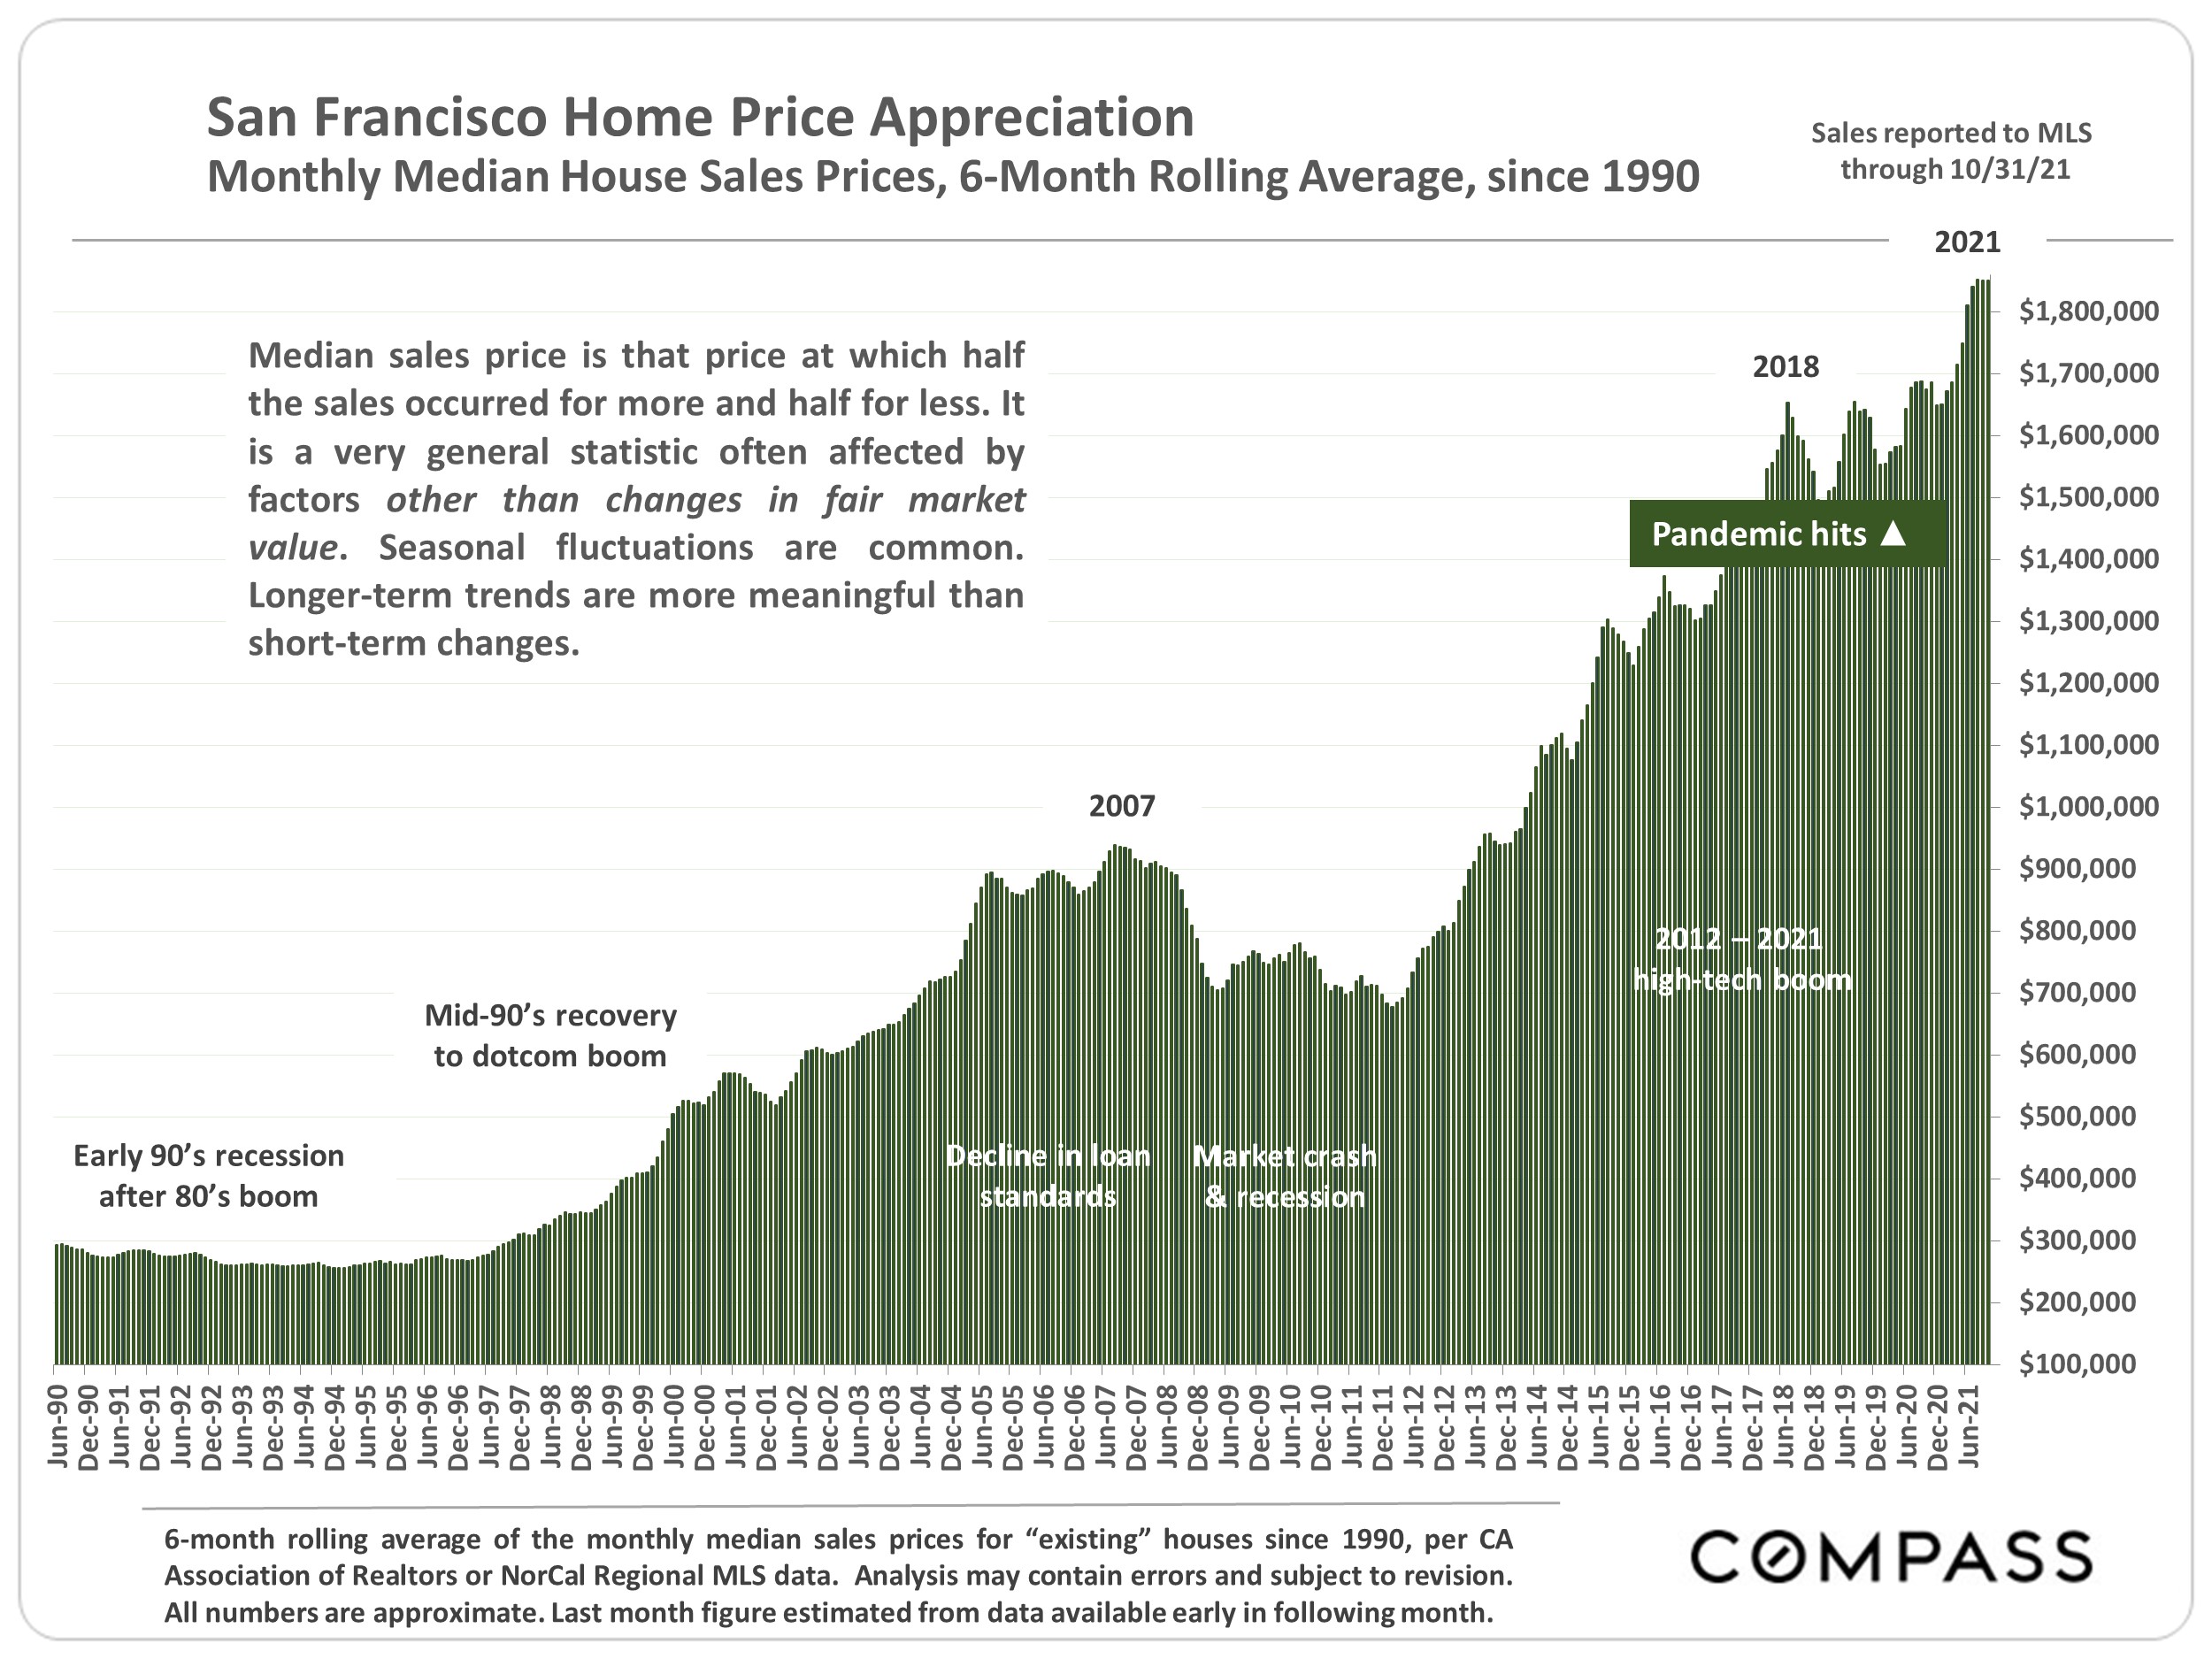 graph of san francisco home price appreciation since 1990